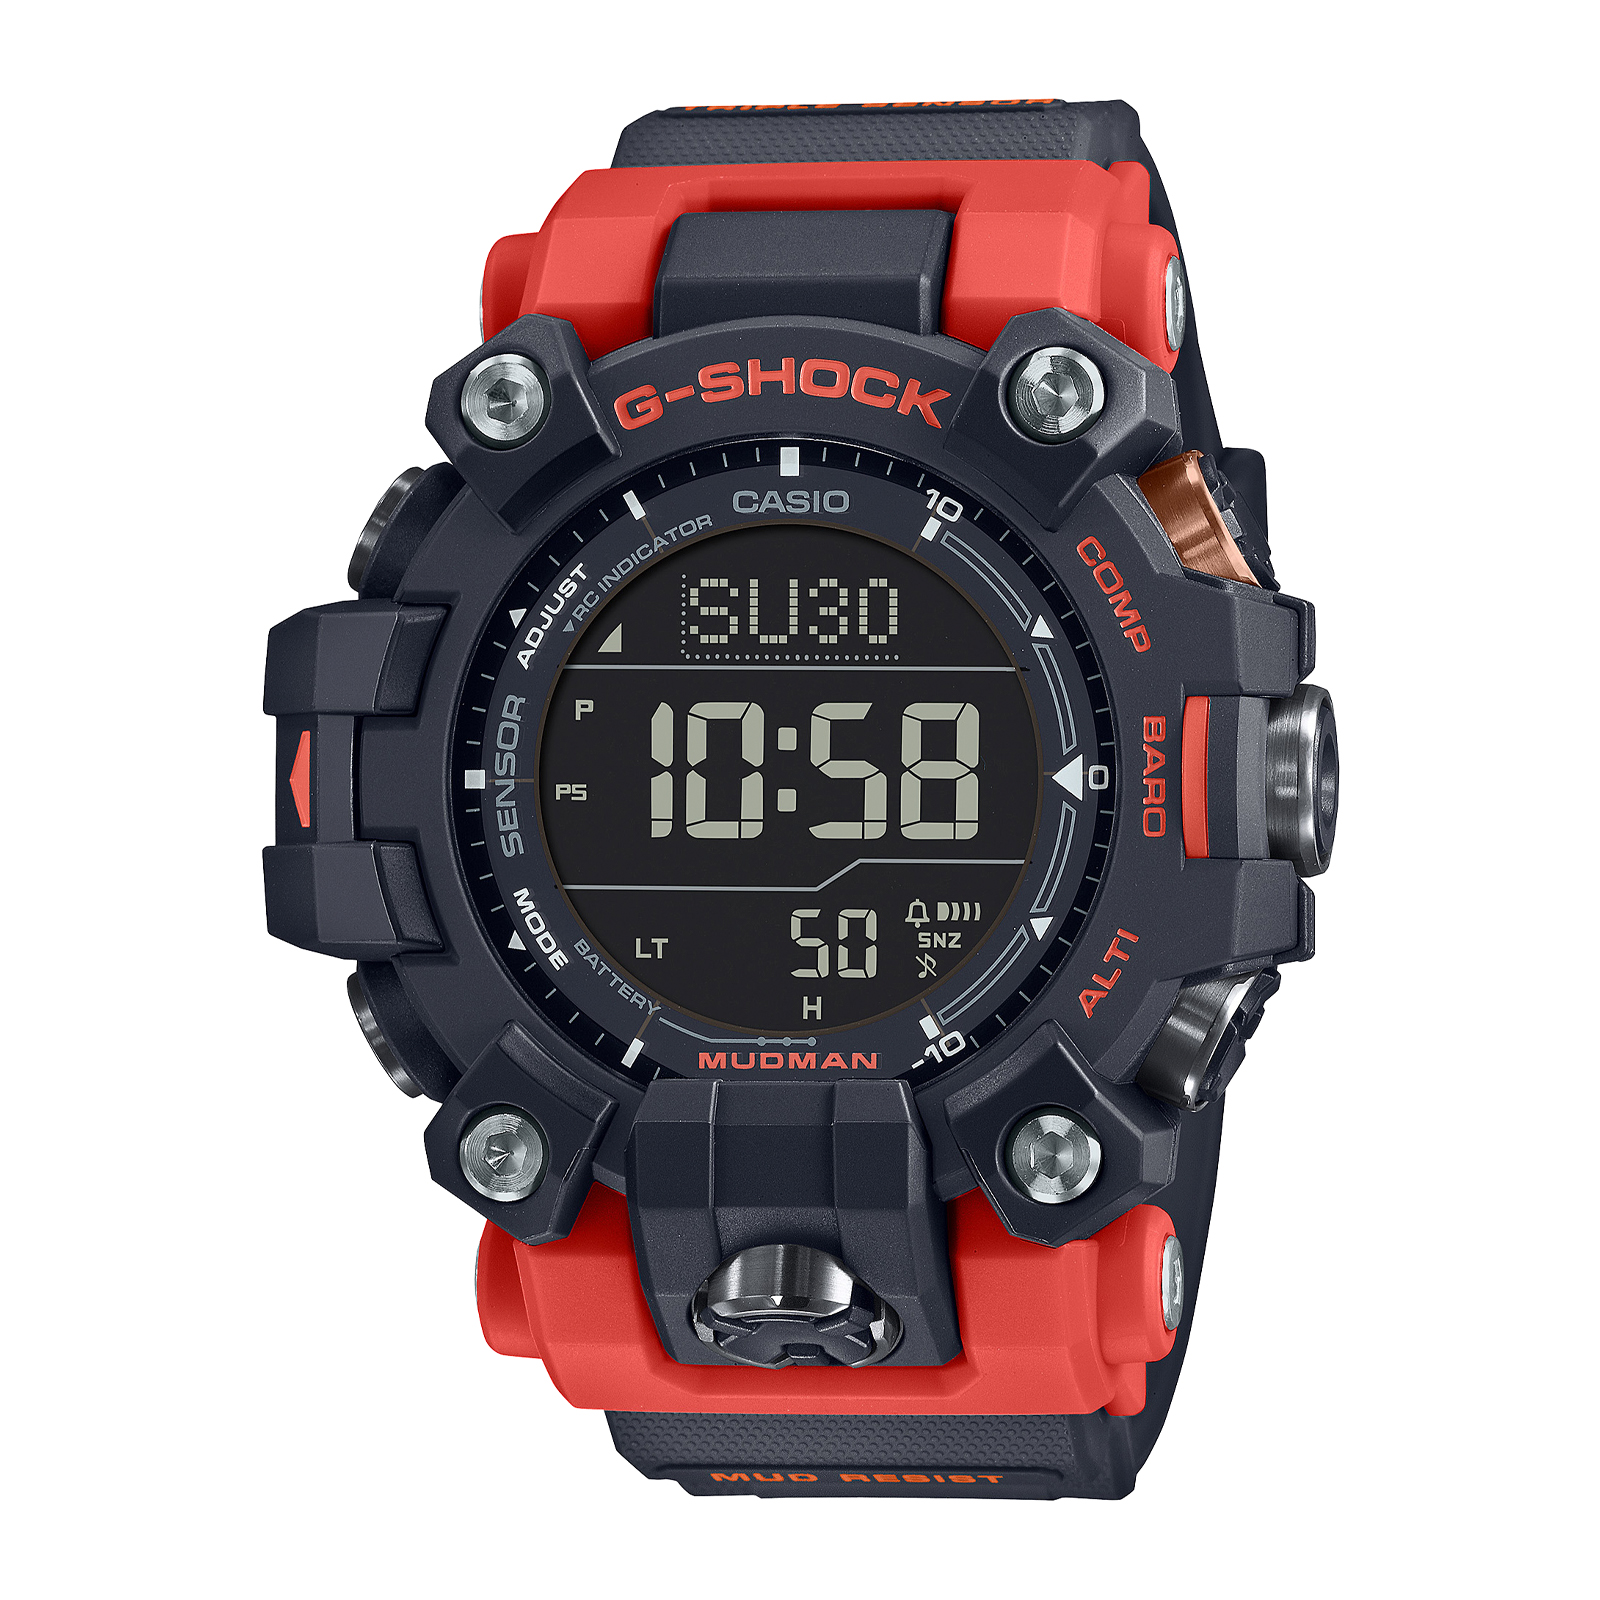 Reloj G-SHOCK GW-9500-1A4 Resina Hombre Negro